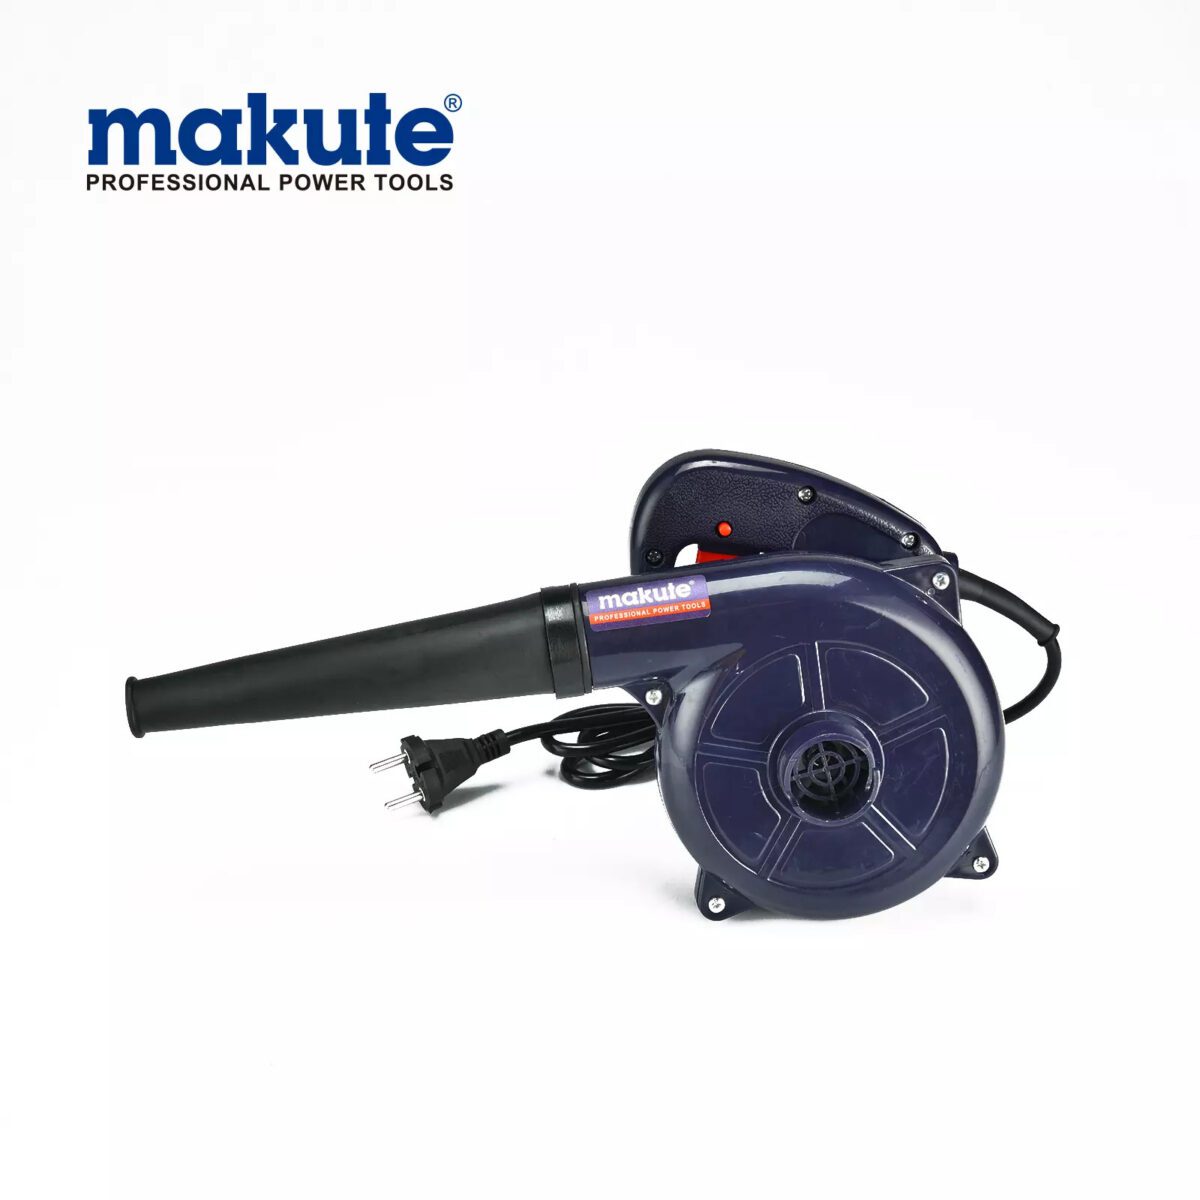 Souffleur-aspirateur-600w-makute-